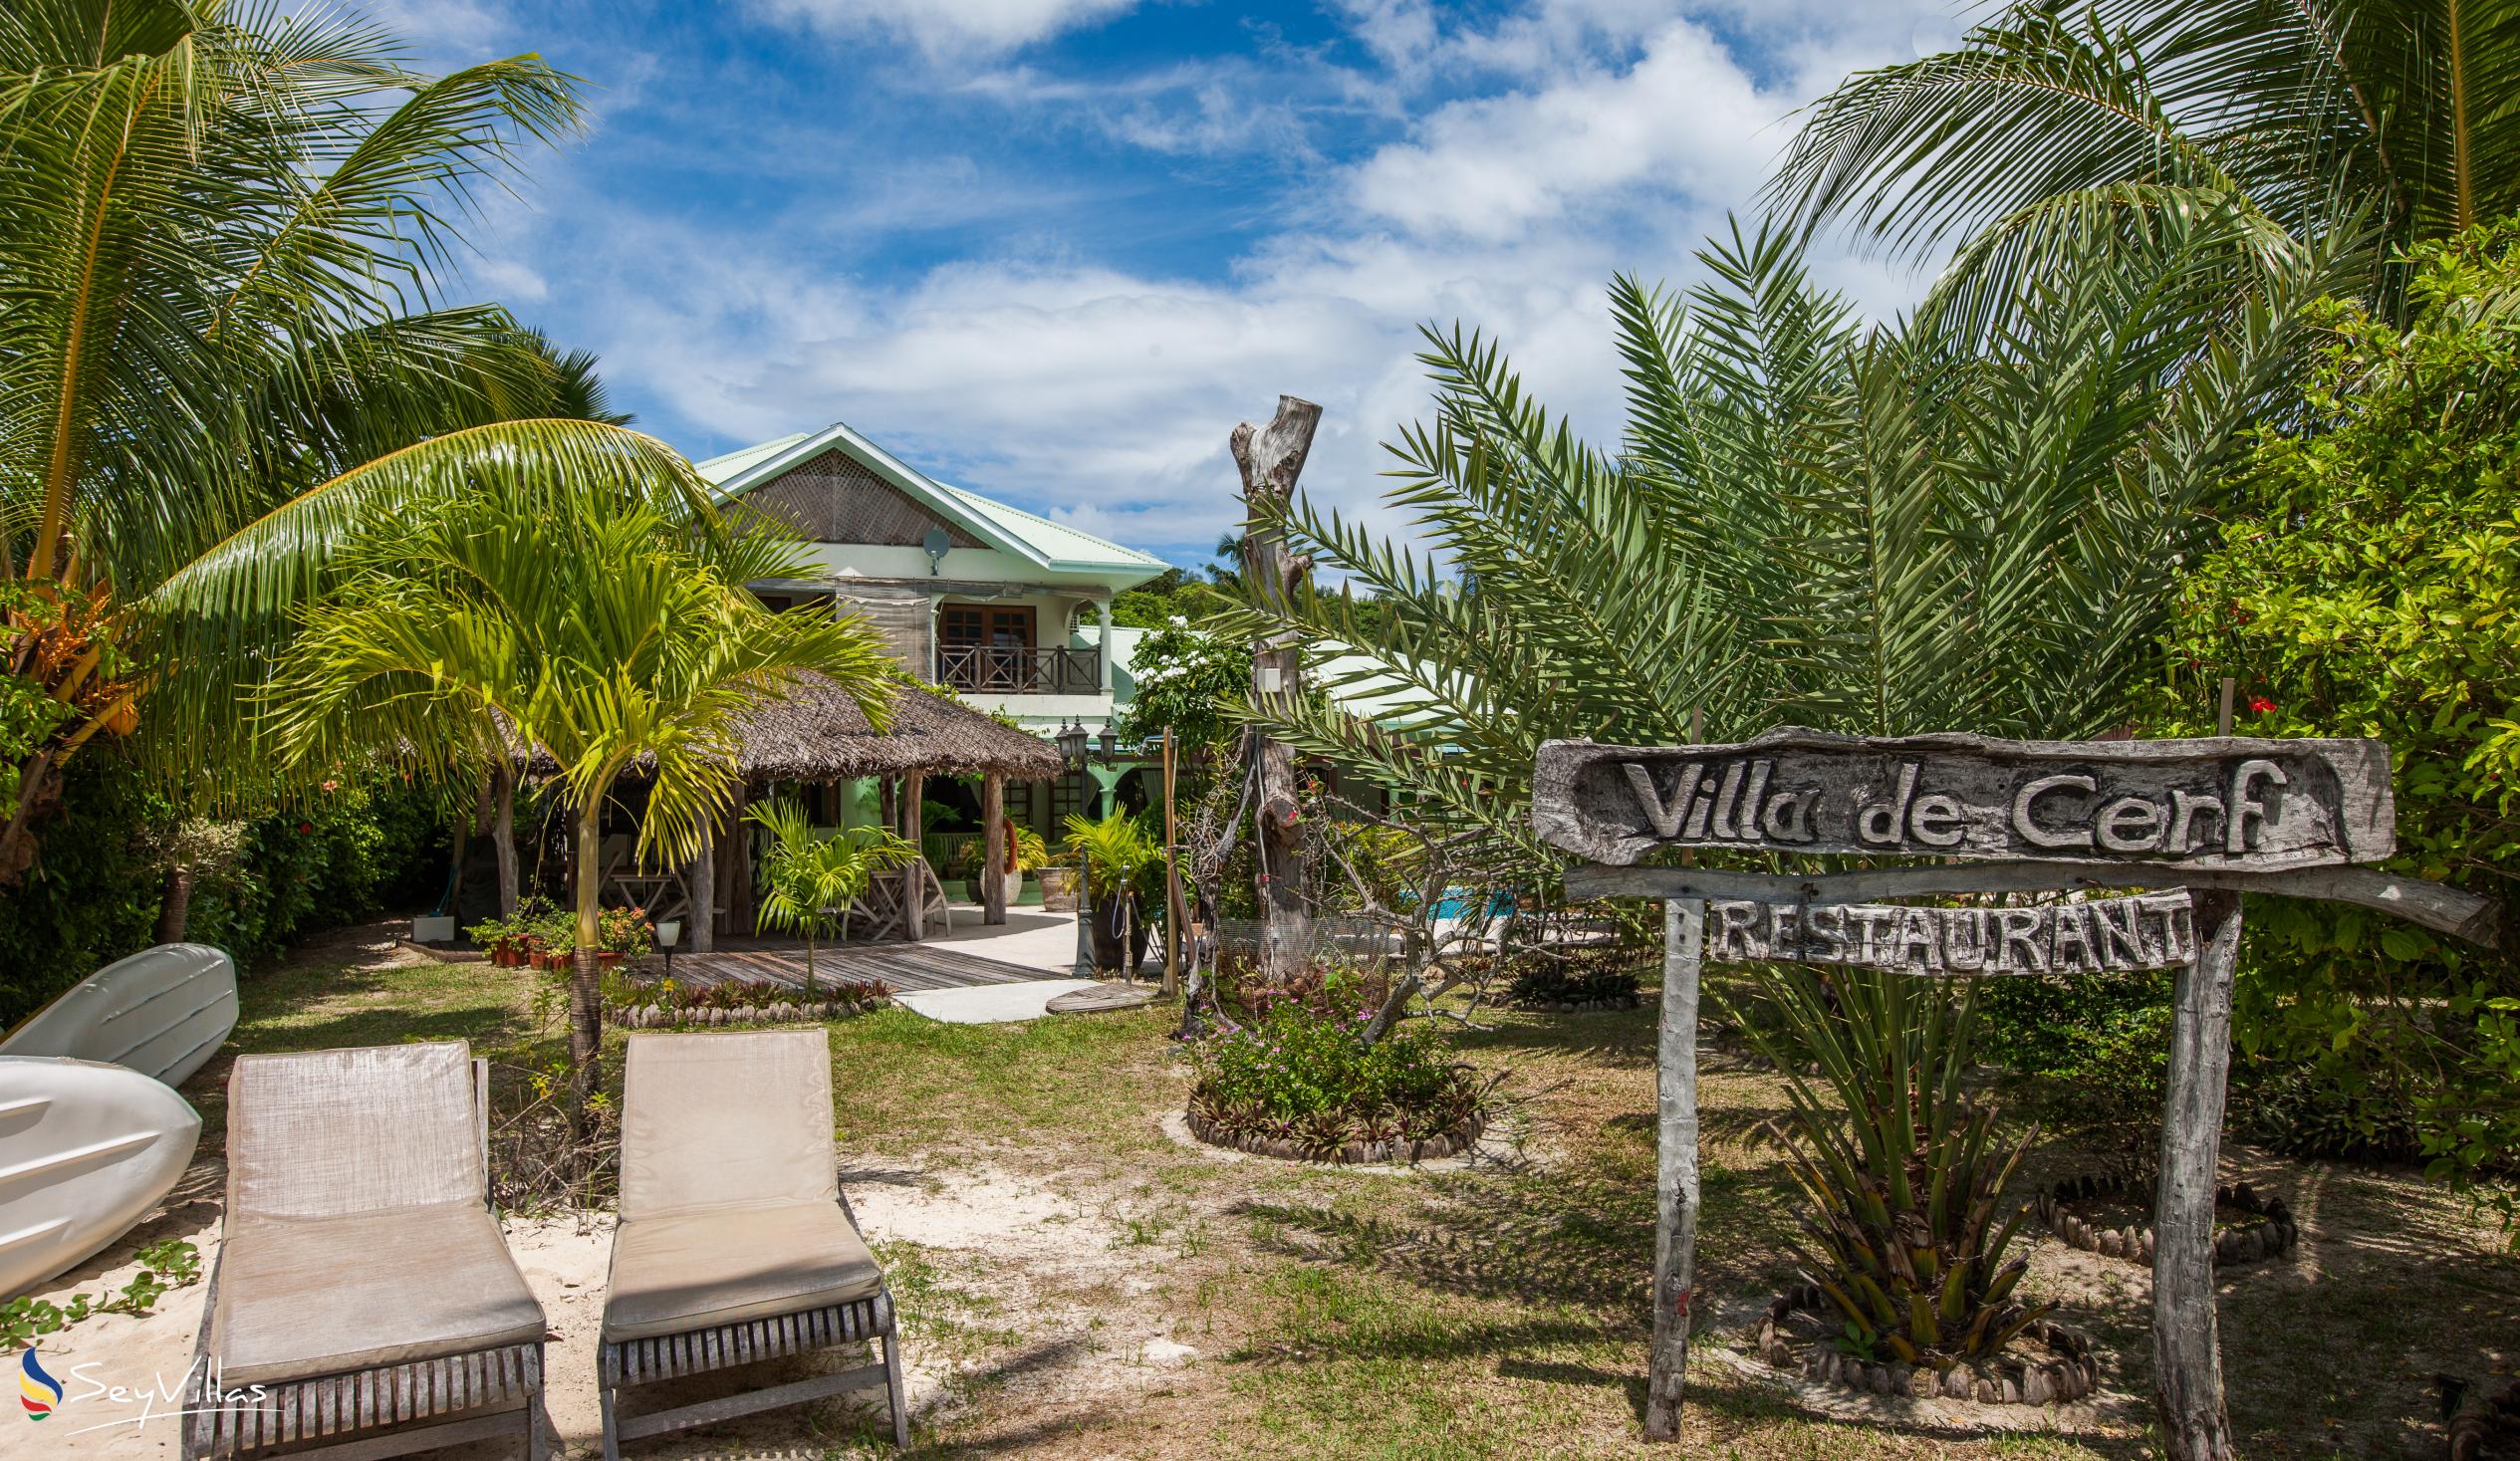 Photo 13: Villa de Cerf - Outdoor area - Cerf Island (Seychelles)